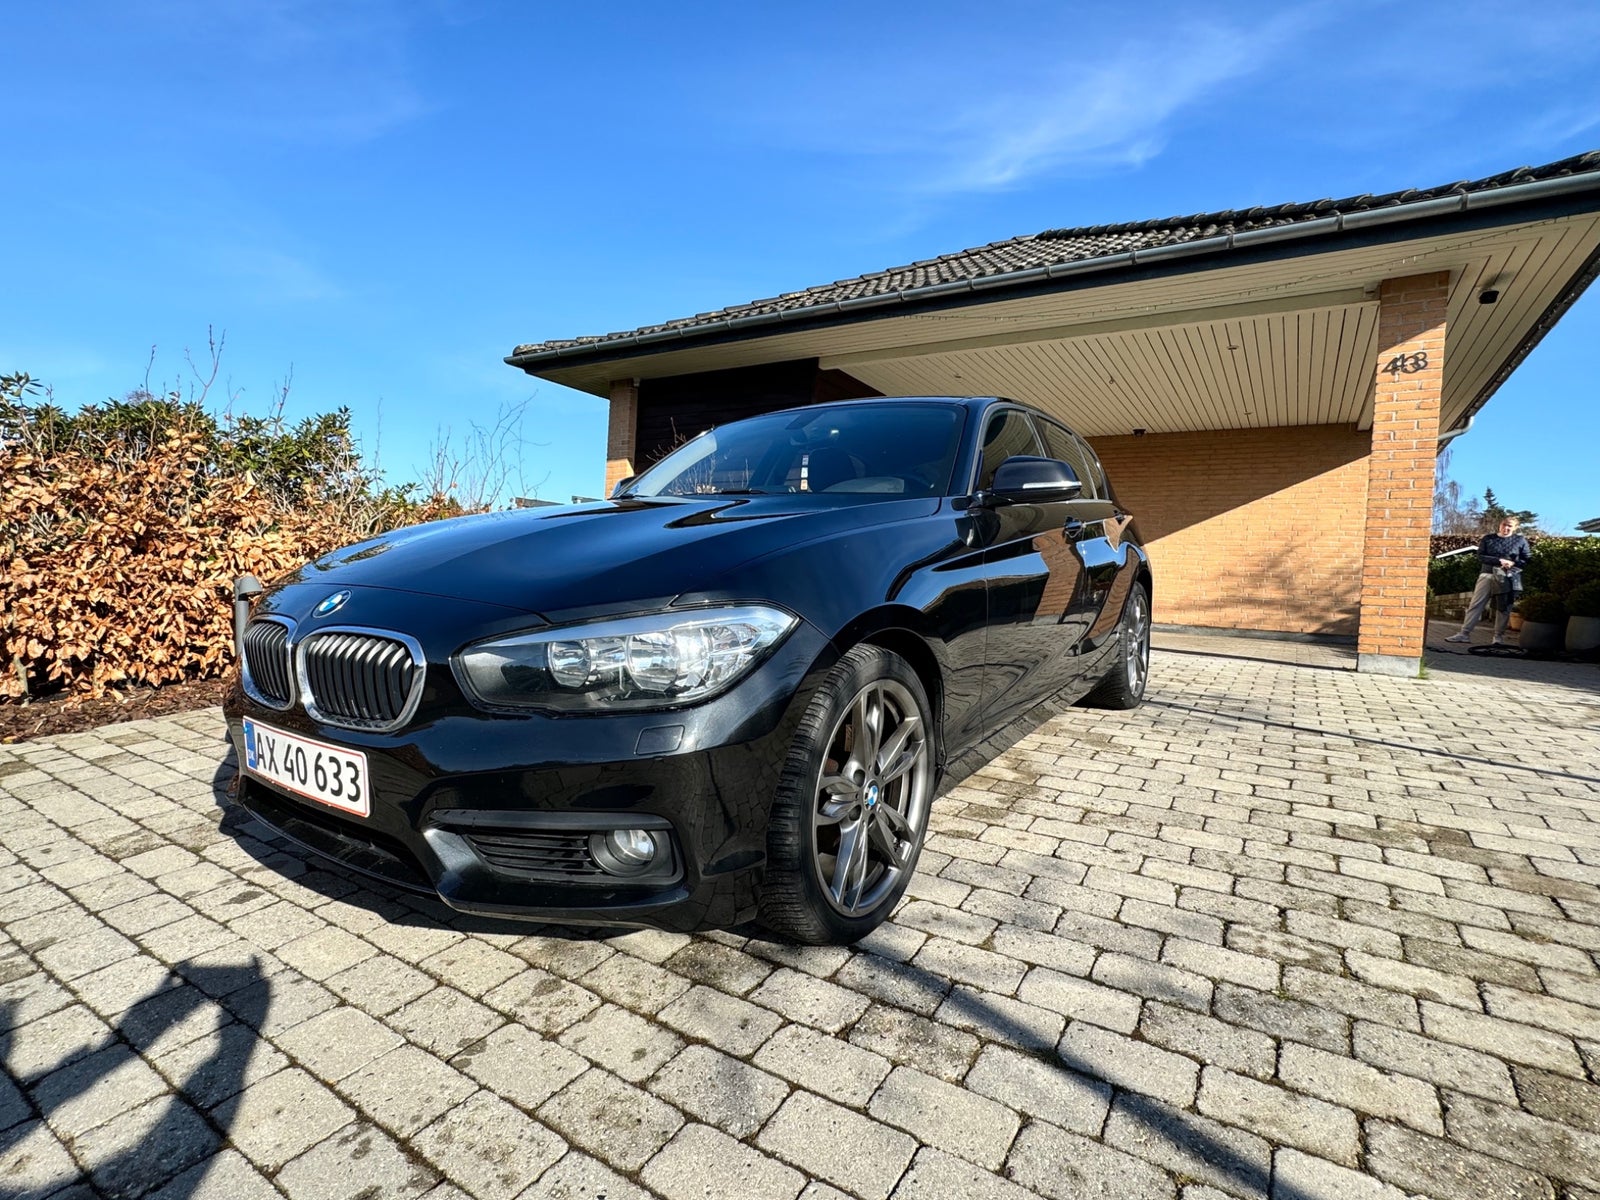 BMW 118d 2,0 Advantage Diesel modelår 2016 km 191000